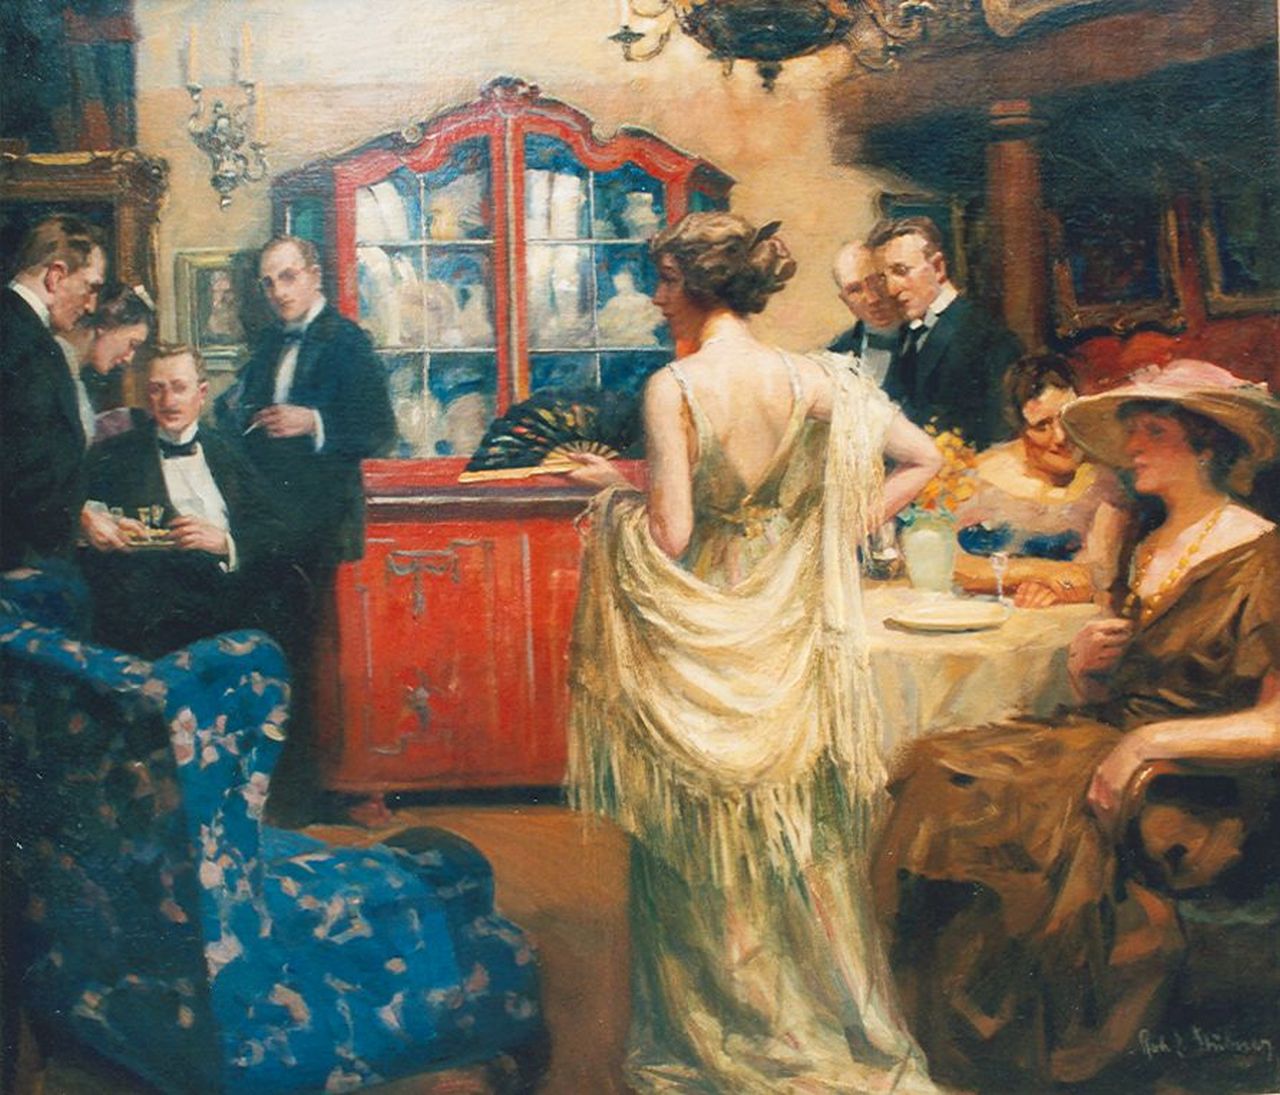 Stübner R.E.  | Robert Emil Stübner, Cocktail Party, olieverf op doek 120,0 x 140,0 cm, gesigneerd rechtsonder